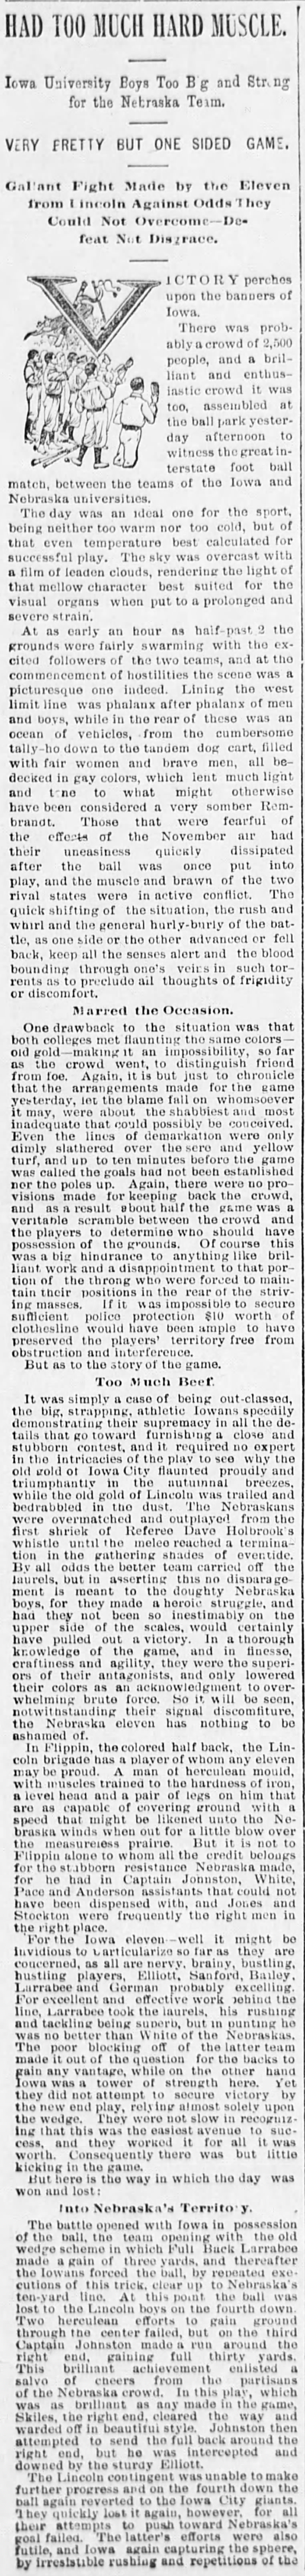 1891 Nebraska-Iowa football, Omaha Bee part 1